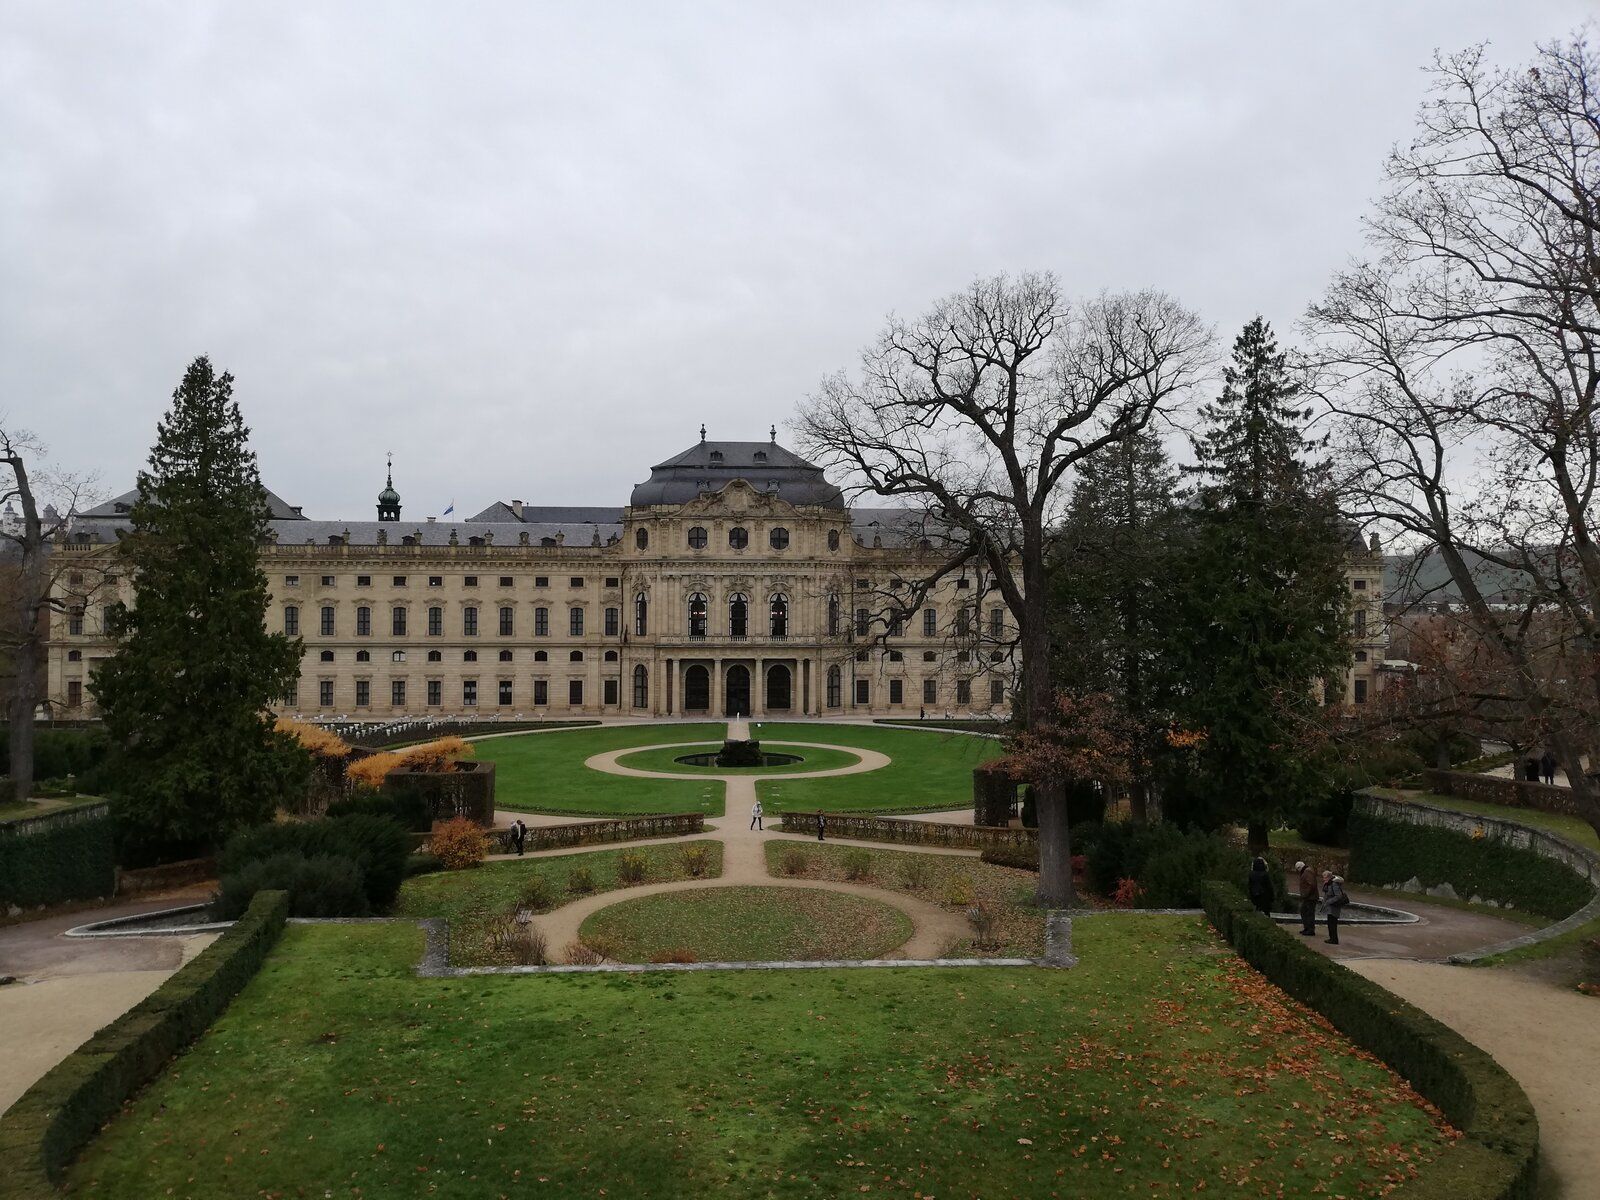 Würzburg Residence